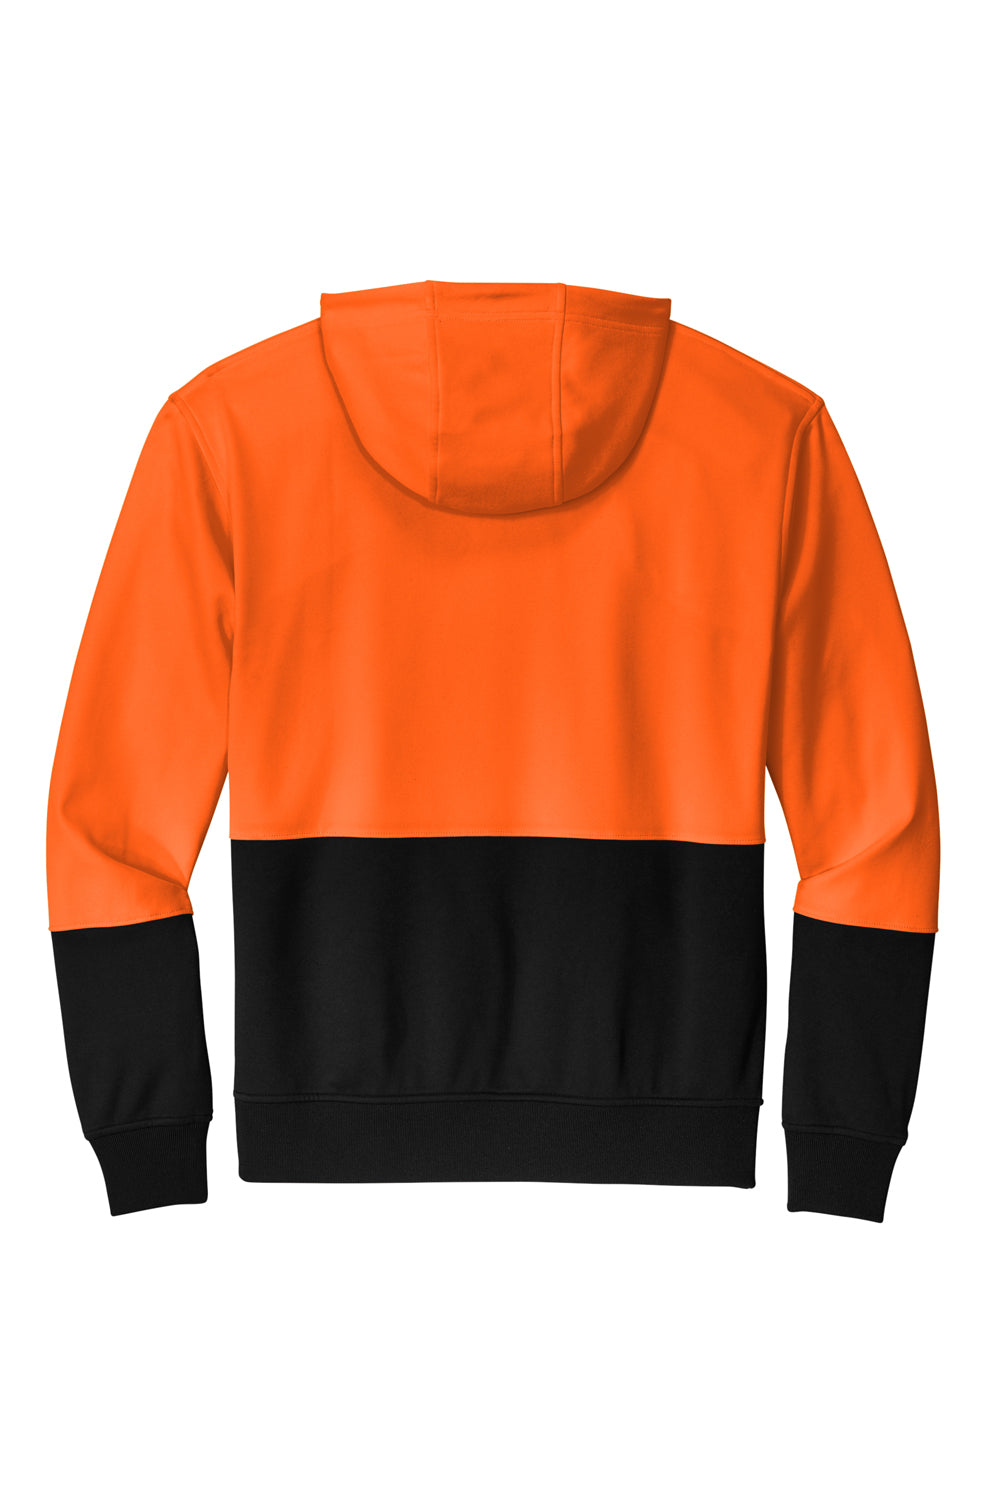 CornerStone CSF01 Enhanced Visibility Fleece Hooded Sweatshirt Hoodie Safety Orange Flat Back